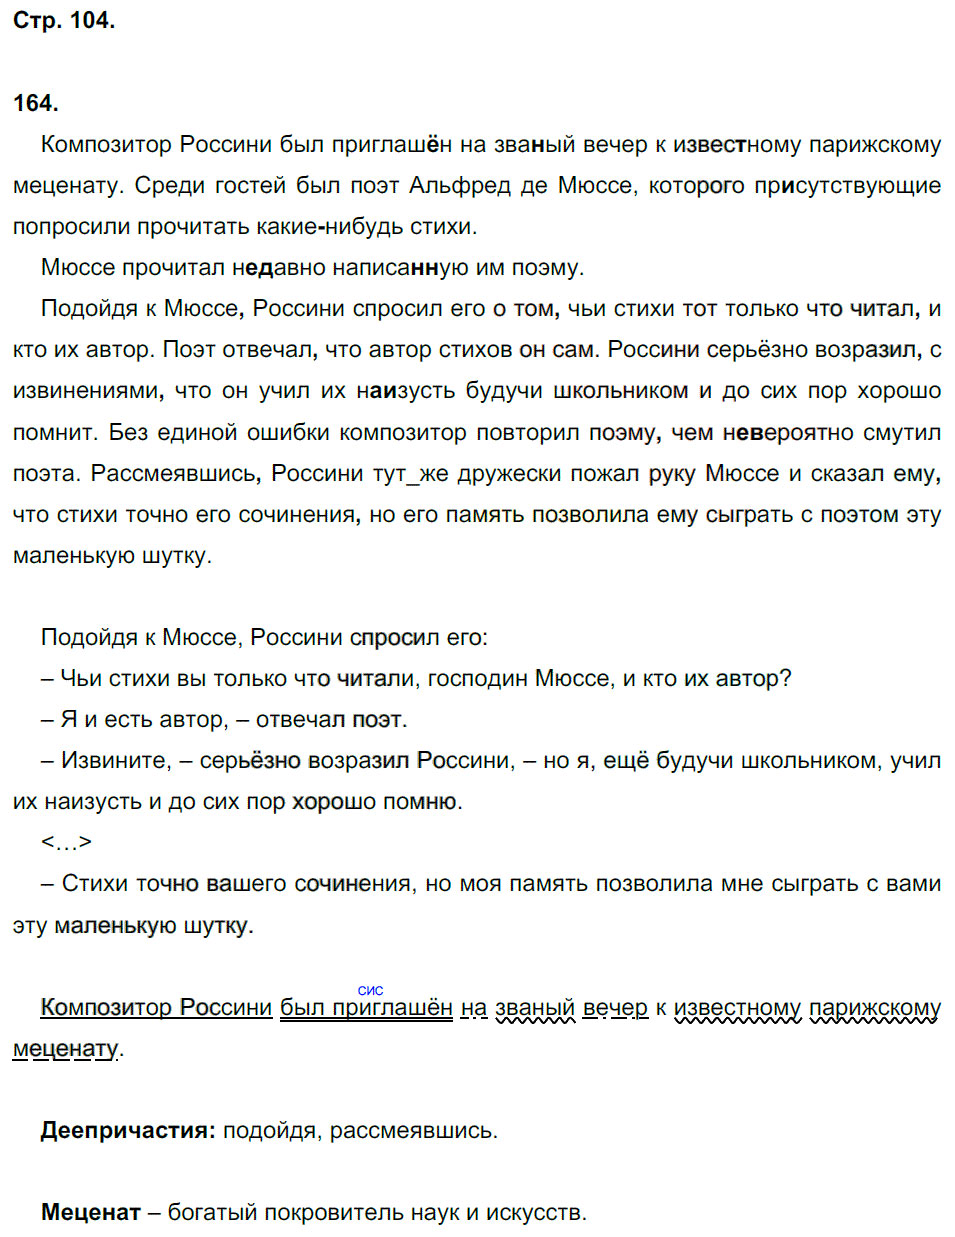 гдз 8 класс рабочая тетрадь страница 104 русский язык Кулаева